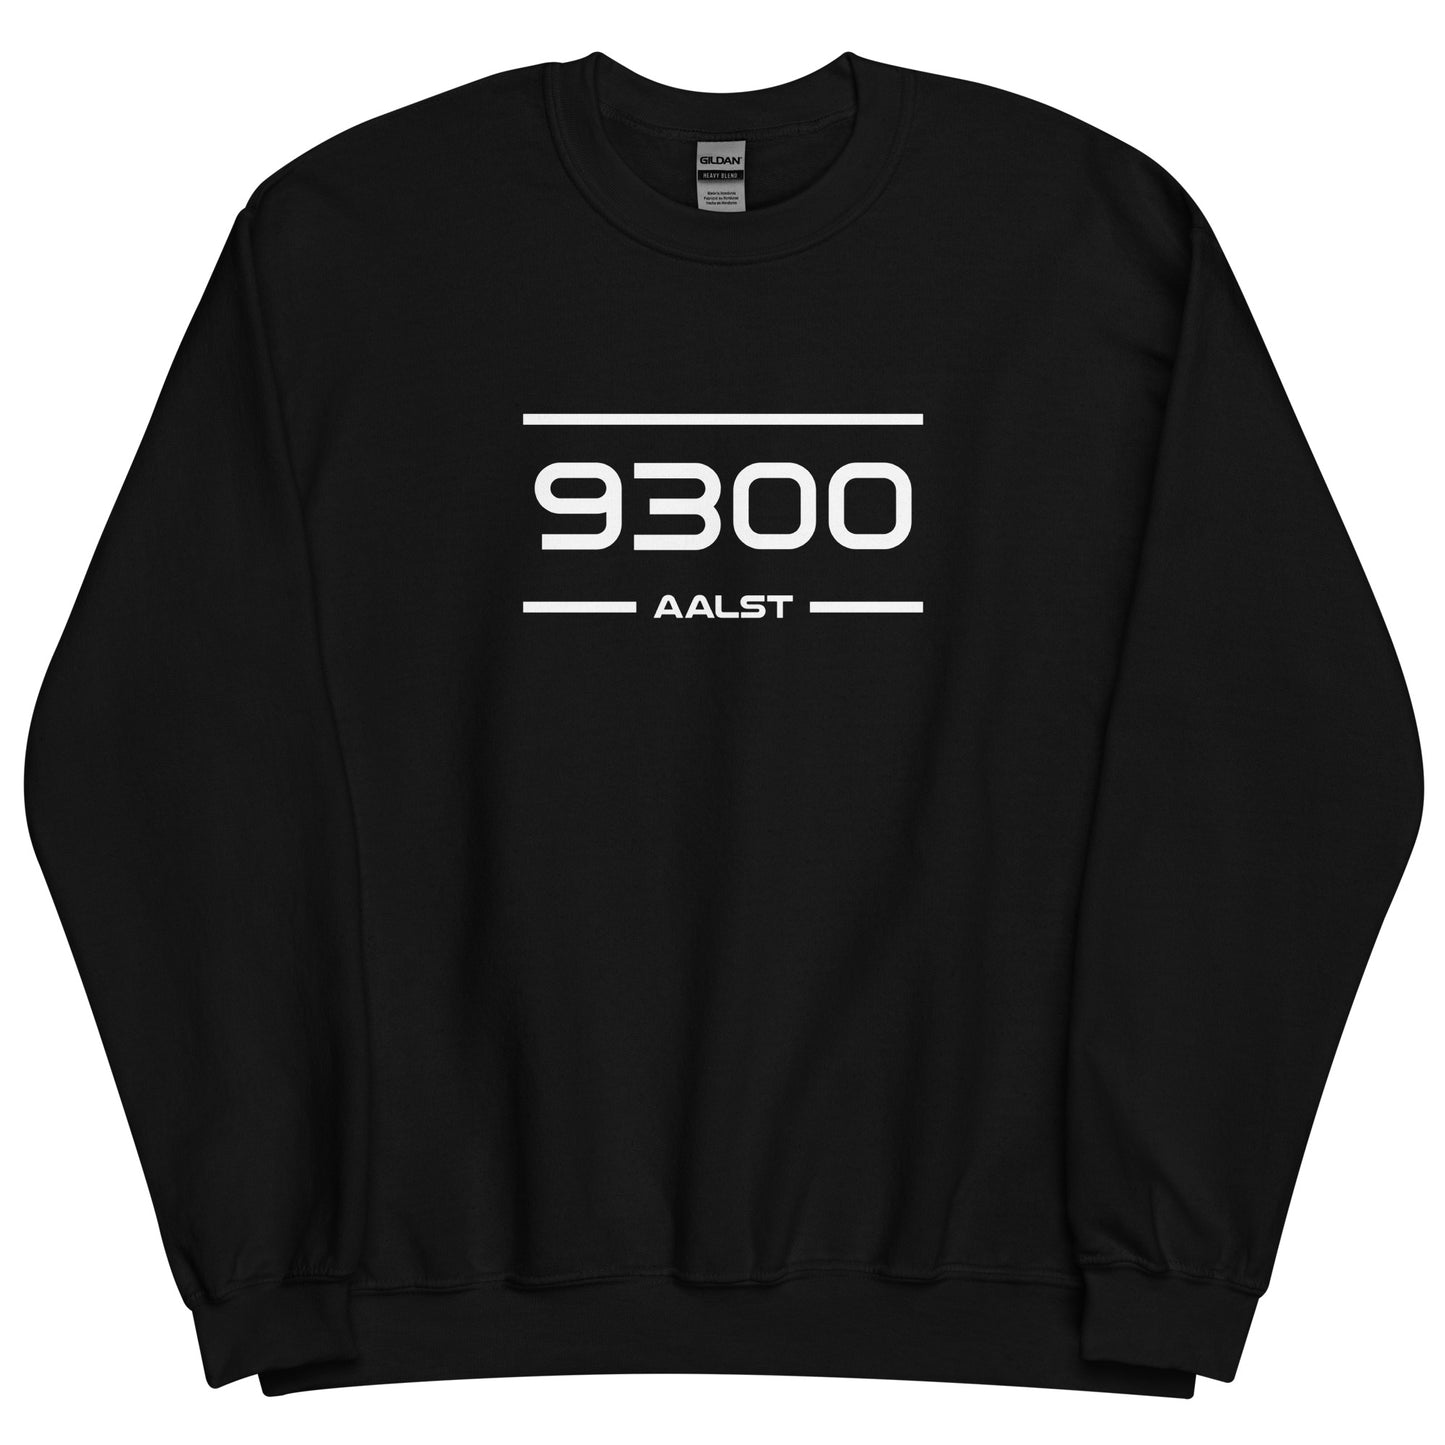 Sweater - 9300 - Aalst (M/V)